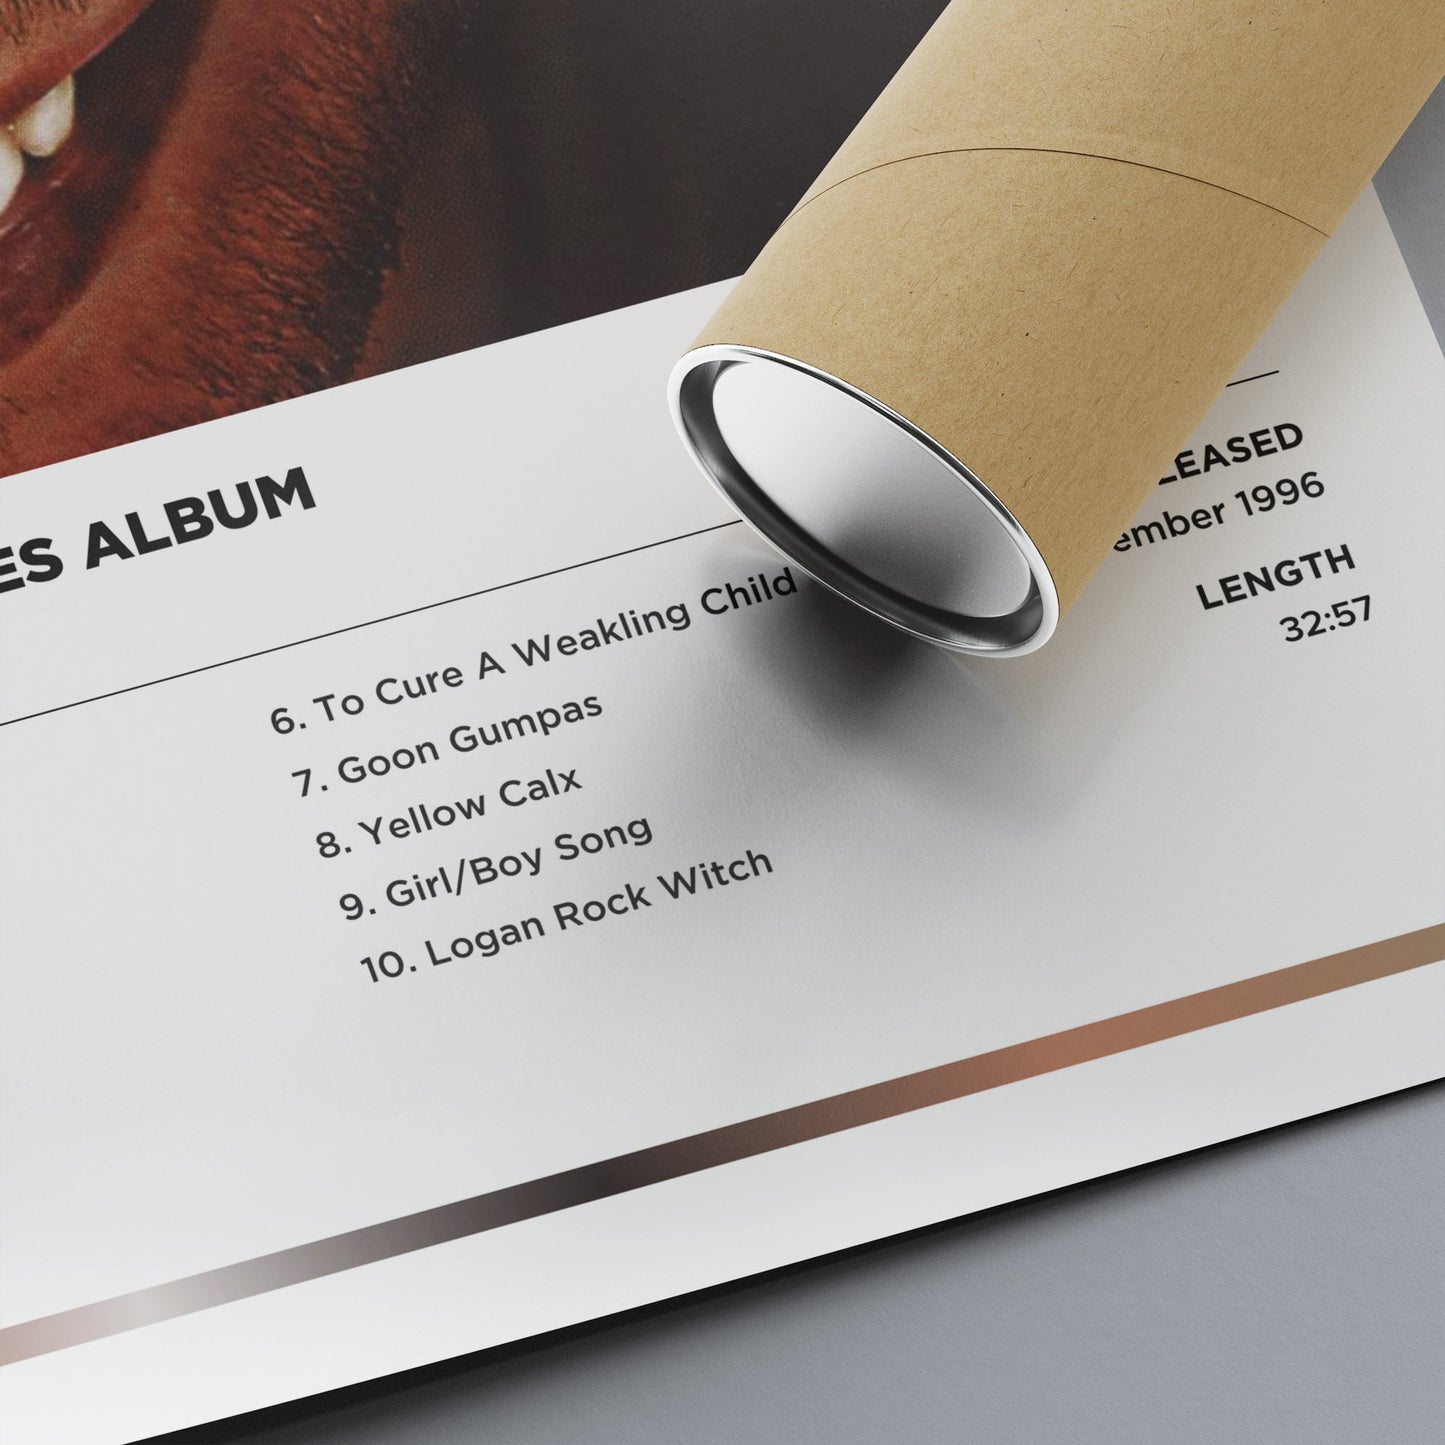 Aphex Twin - Richard D. James Album Poster Print - Framed Options Available | Polaroid Style | Album Cover Artwork